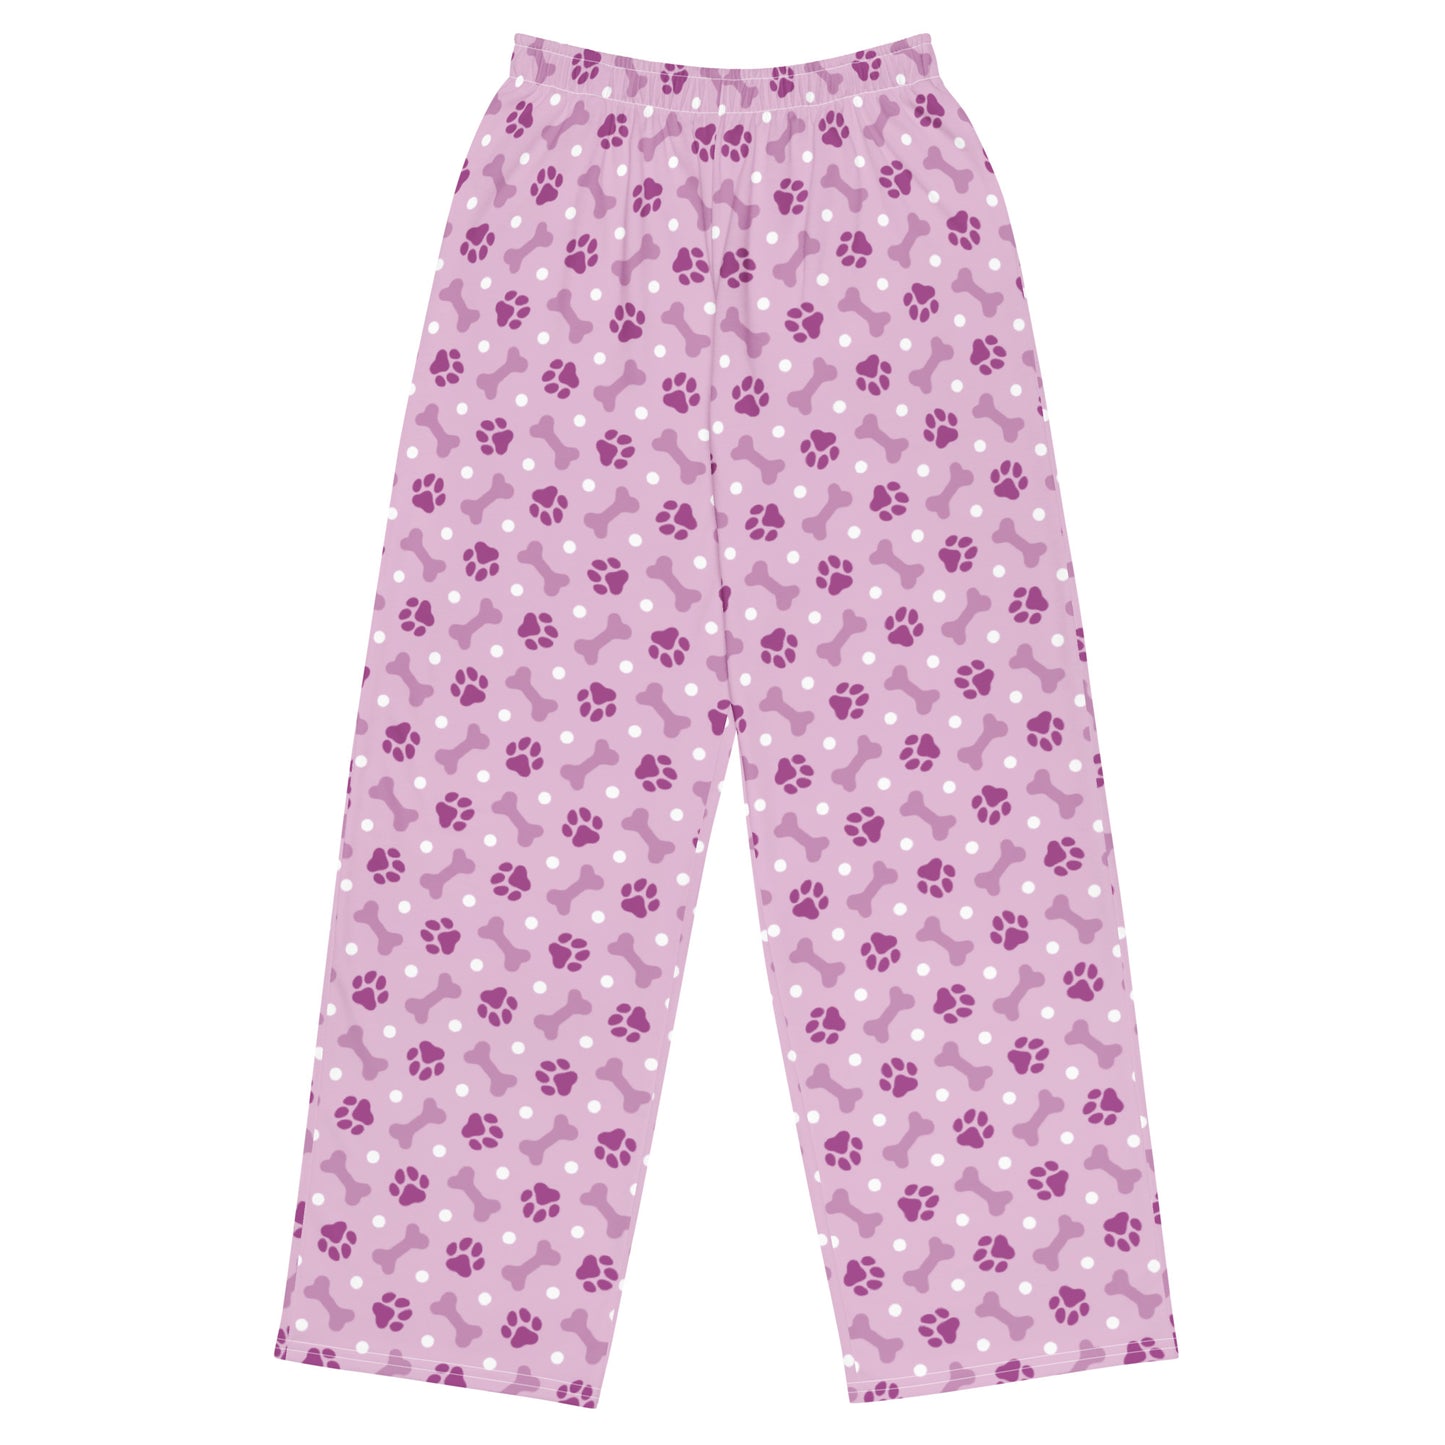 Paws & Bone Print Super Soft Wide-leg Pajama/Sweats Bottoms